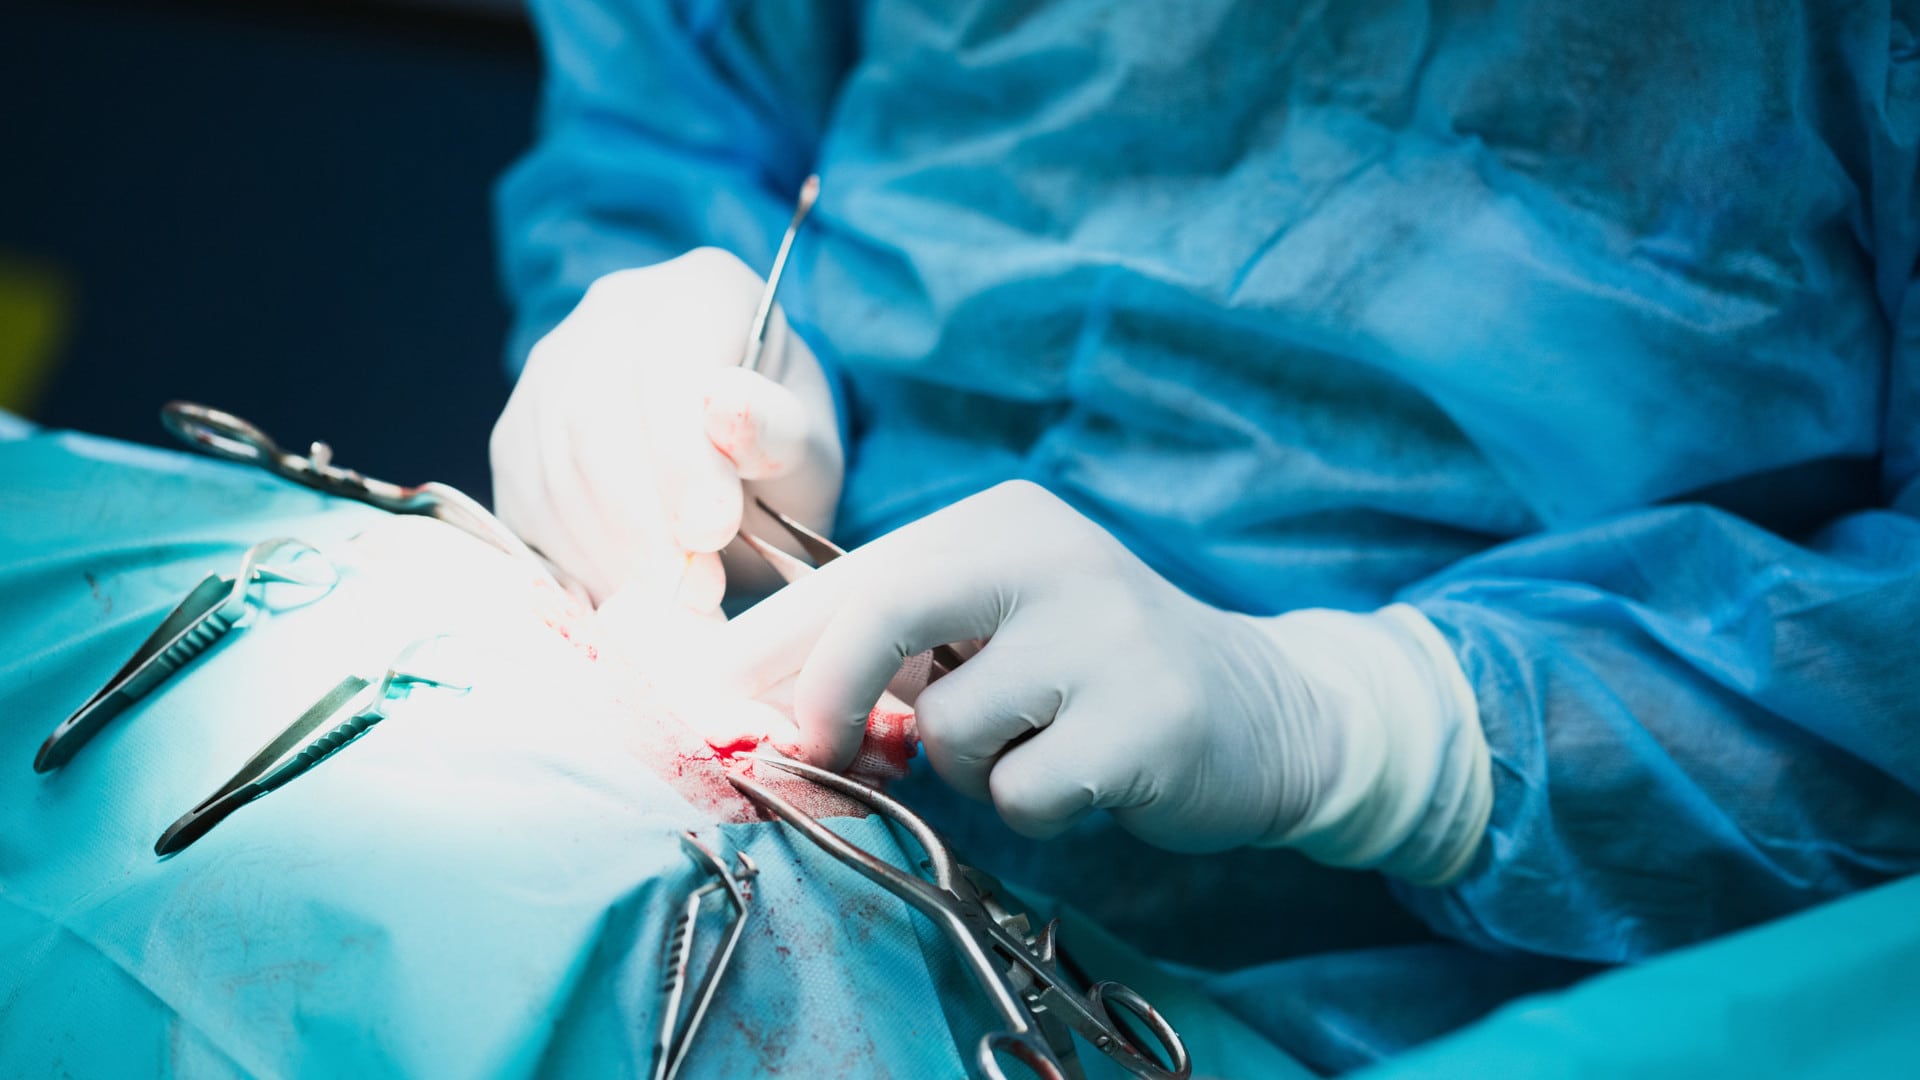 neurosurgery procedures